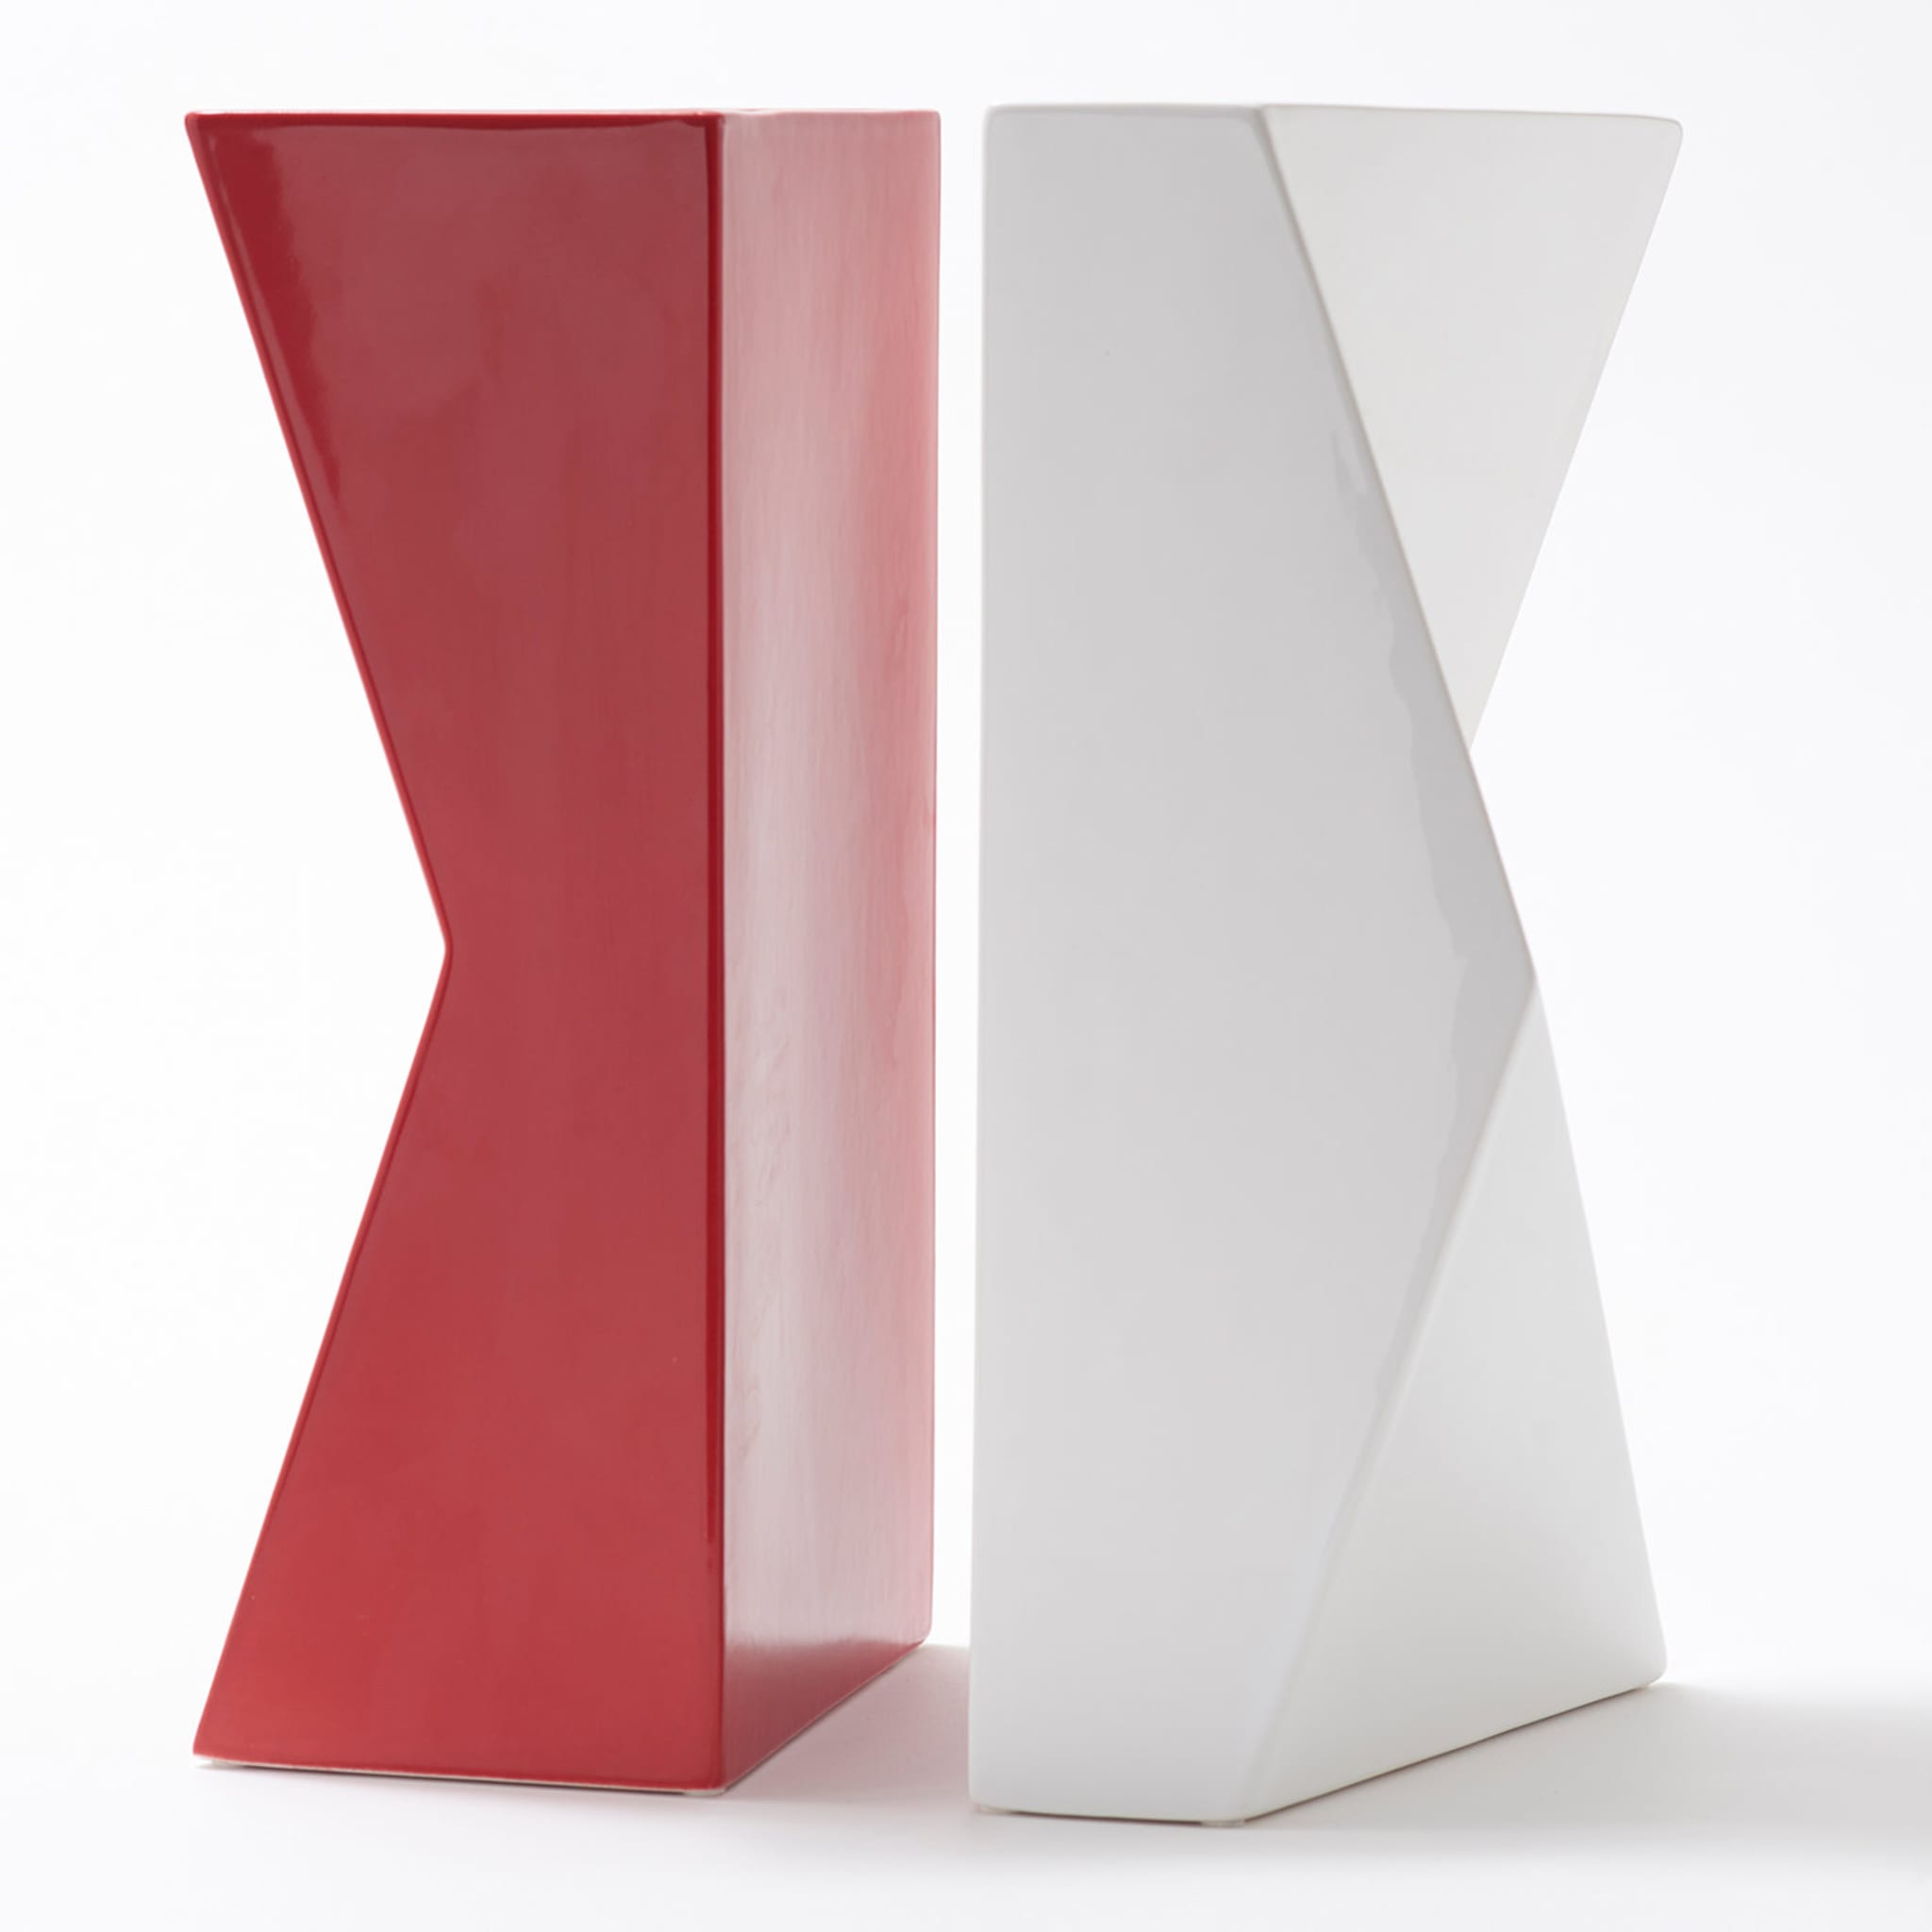 Verso Set of 2 Red and White Vases by Antonio Saporito - Alternative view 2